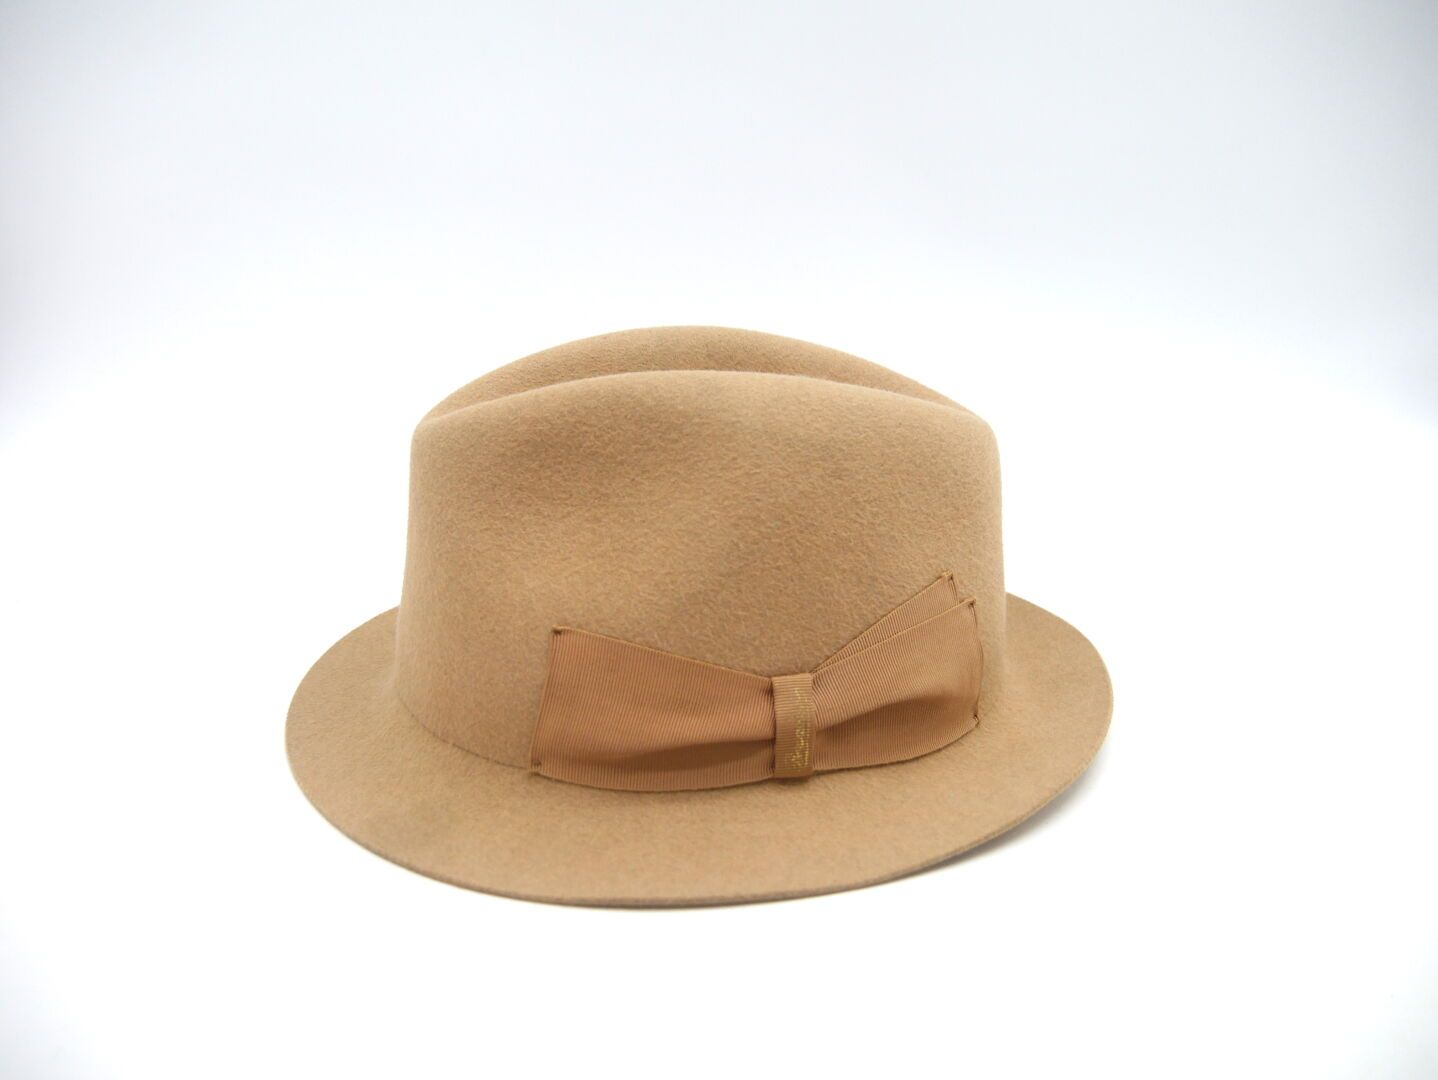 Null 勃萨利诺

米色毡制女帽，带蝴蝶结。意大利制造

尺寸56



使用条件